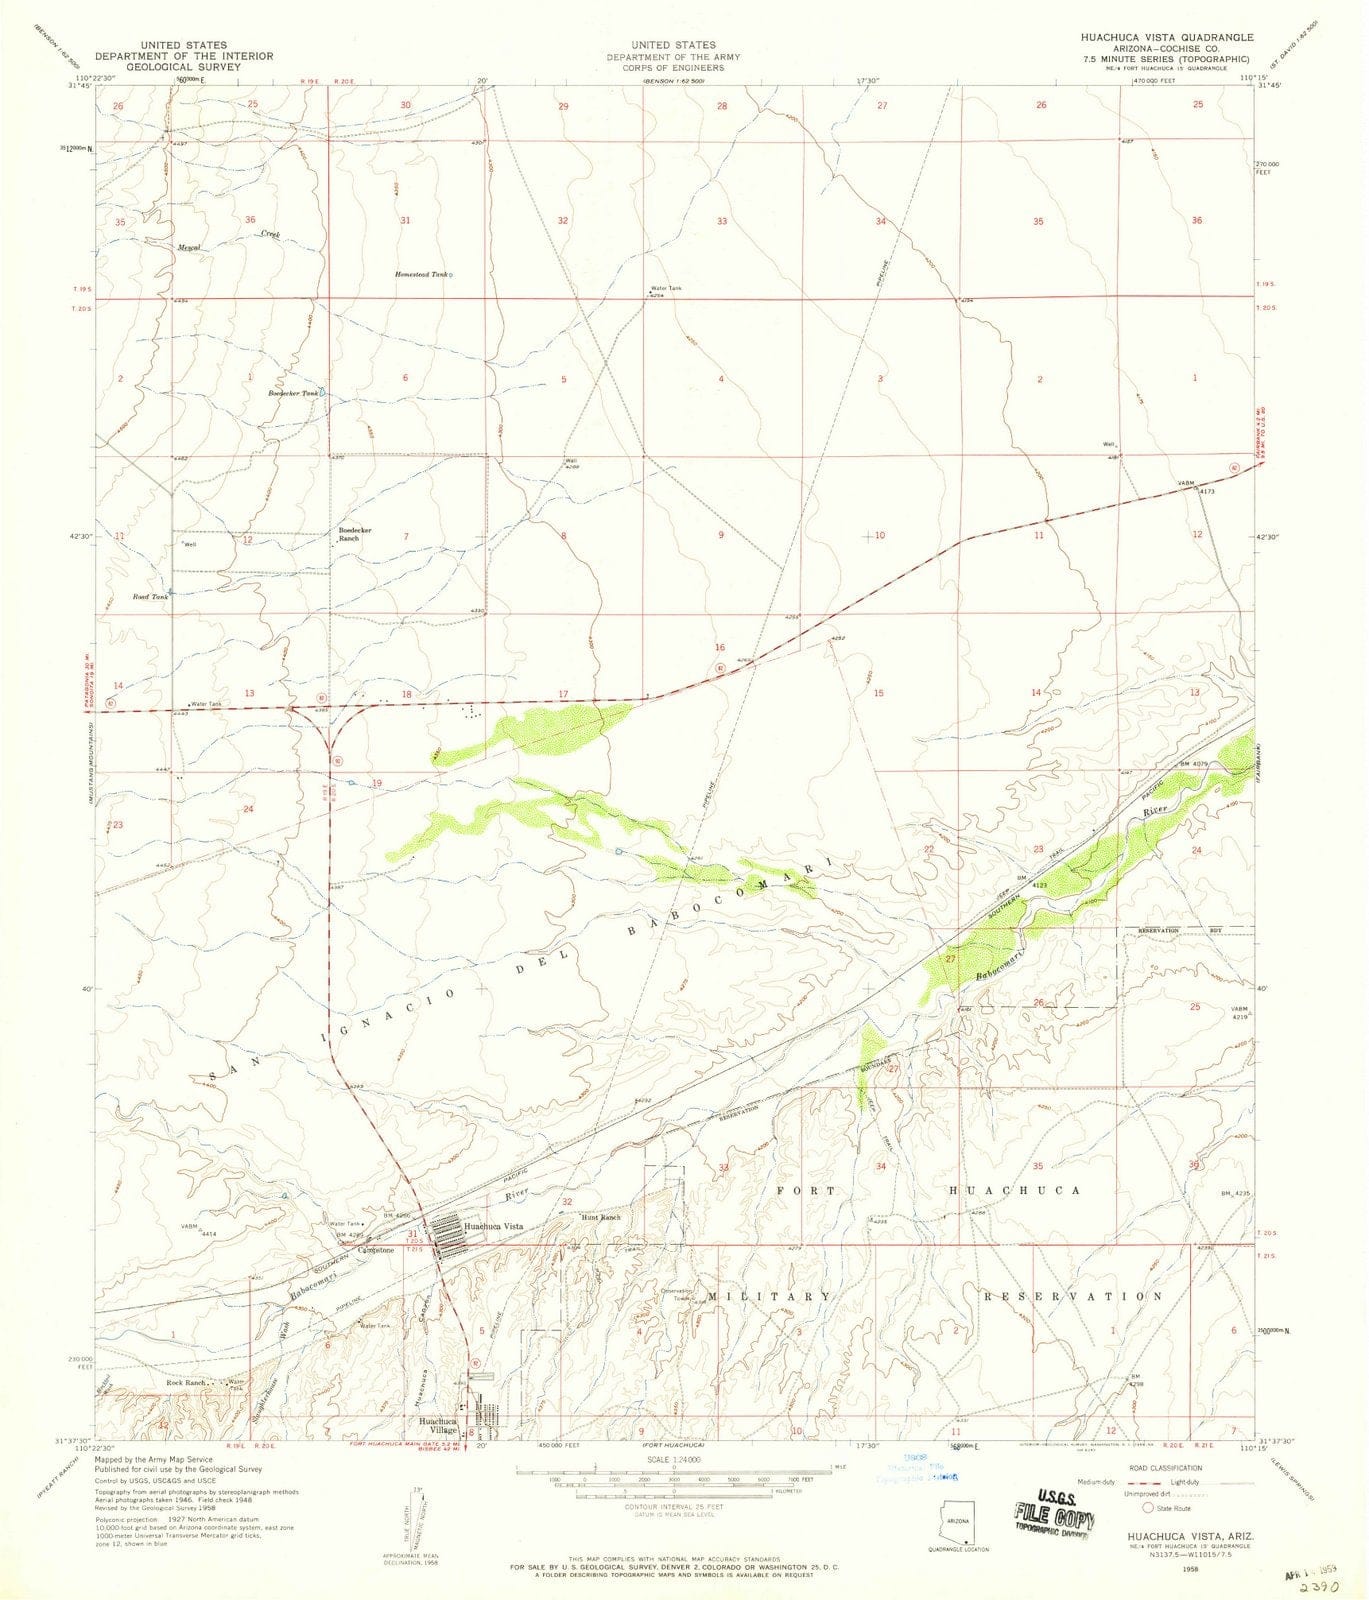 1958 Huachuca Vista, AZ - Arizona - USGS Topographic Map